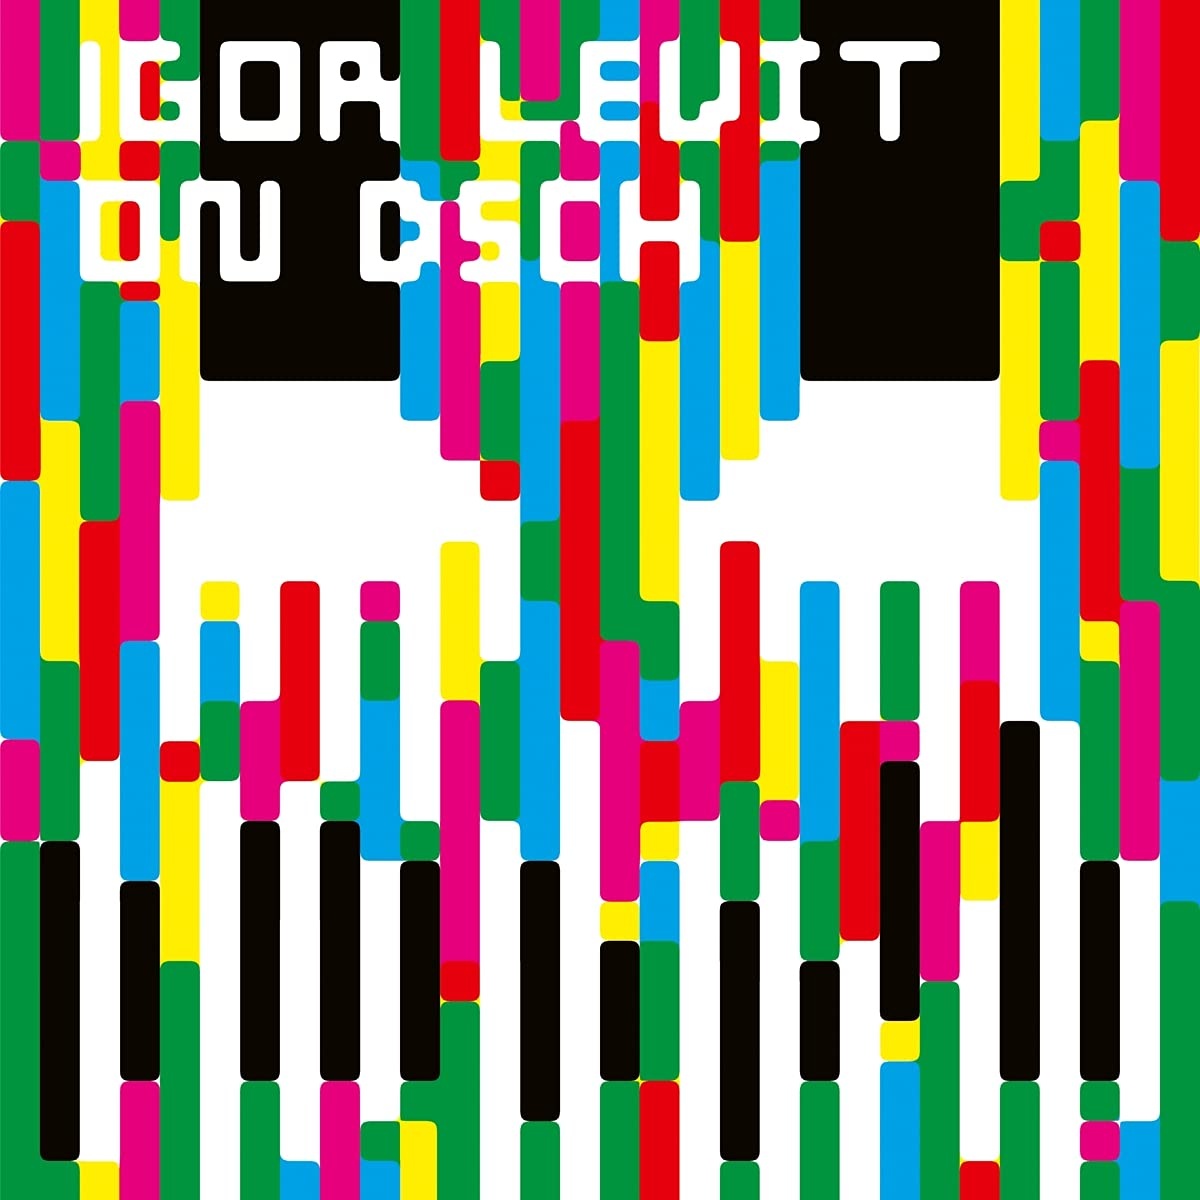 Igor Levit - On DSCH vinyl cover